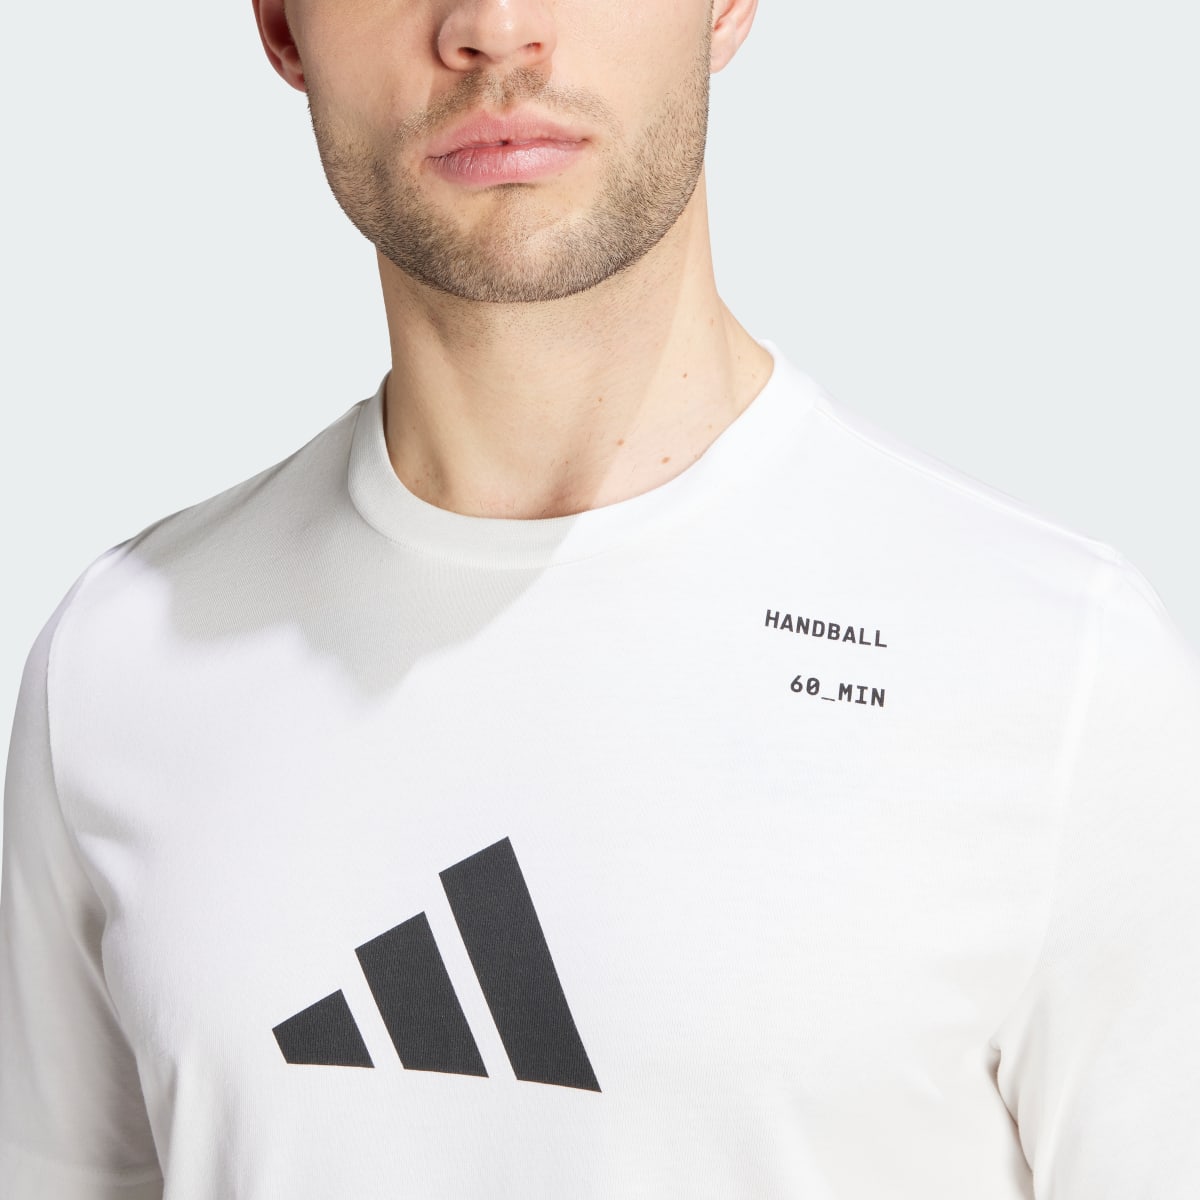 Adidas Handball Category Graphic T-Shirt. 6